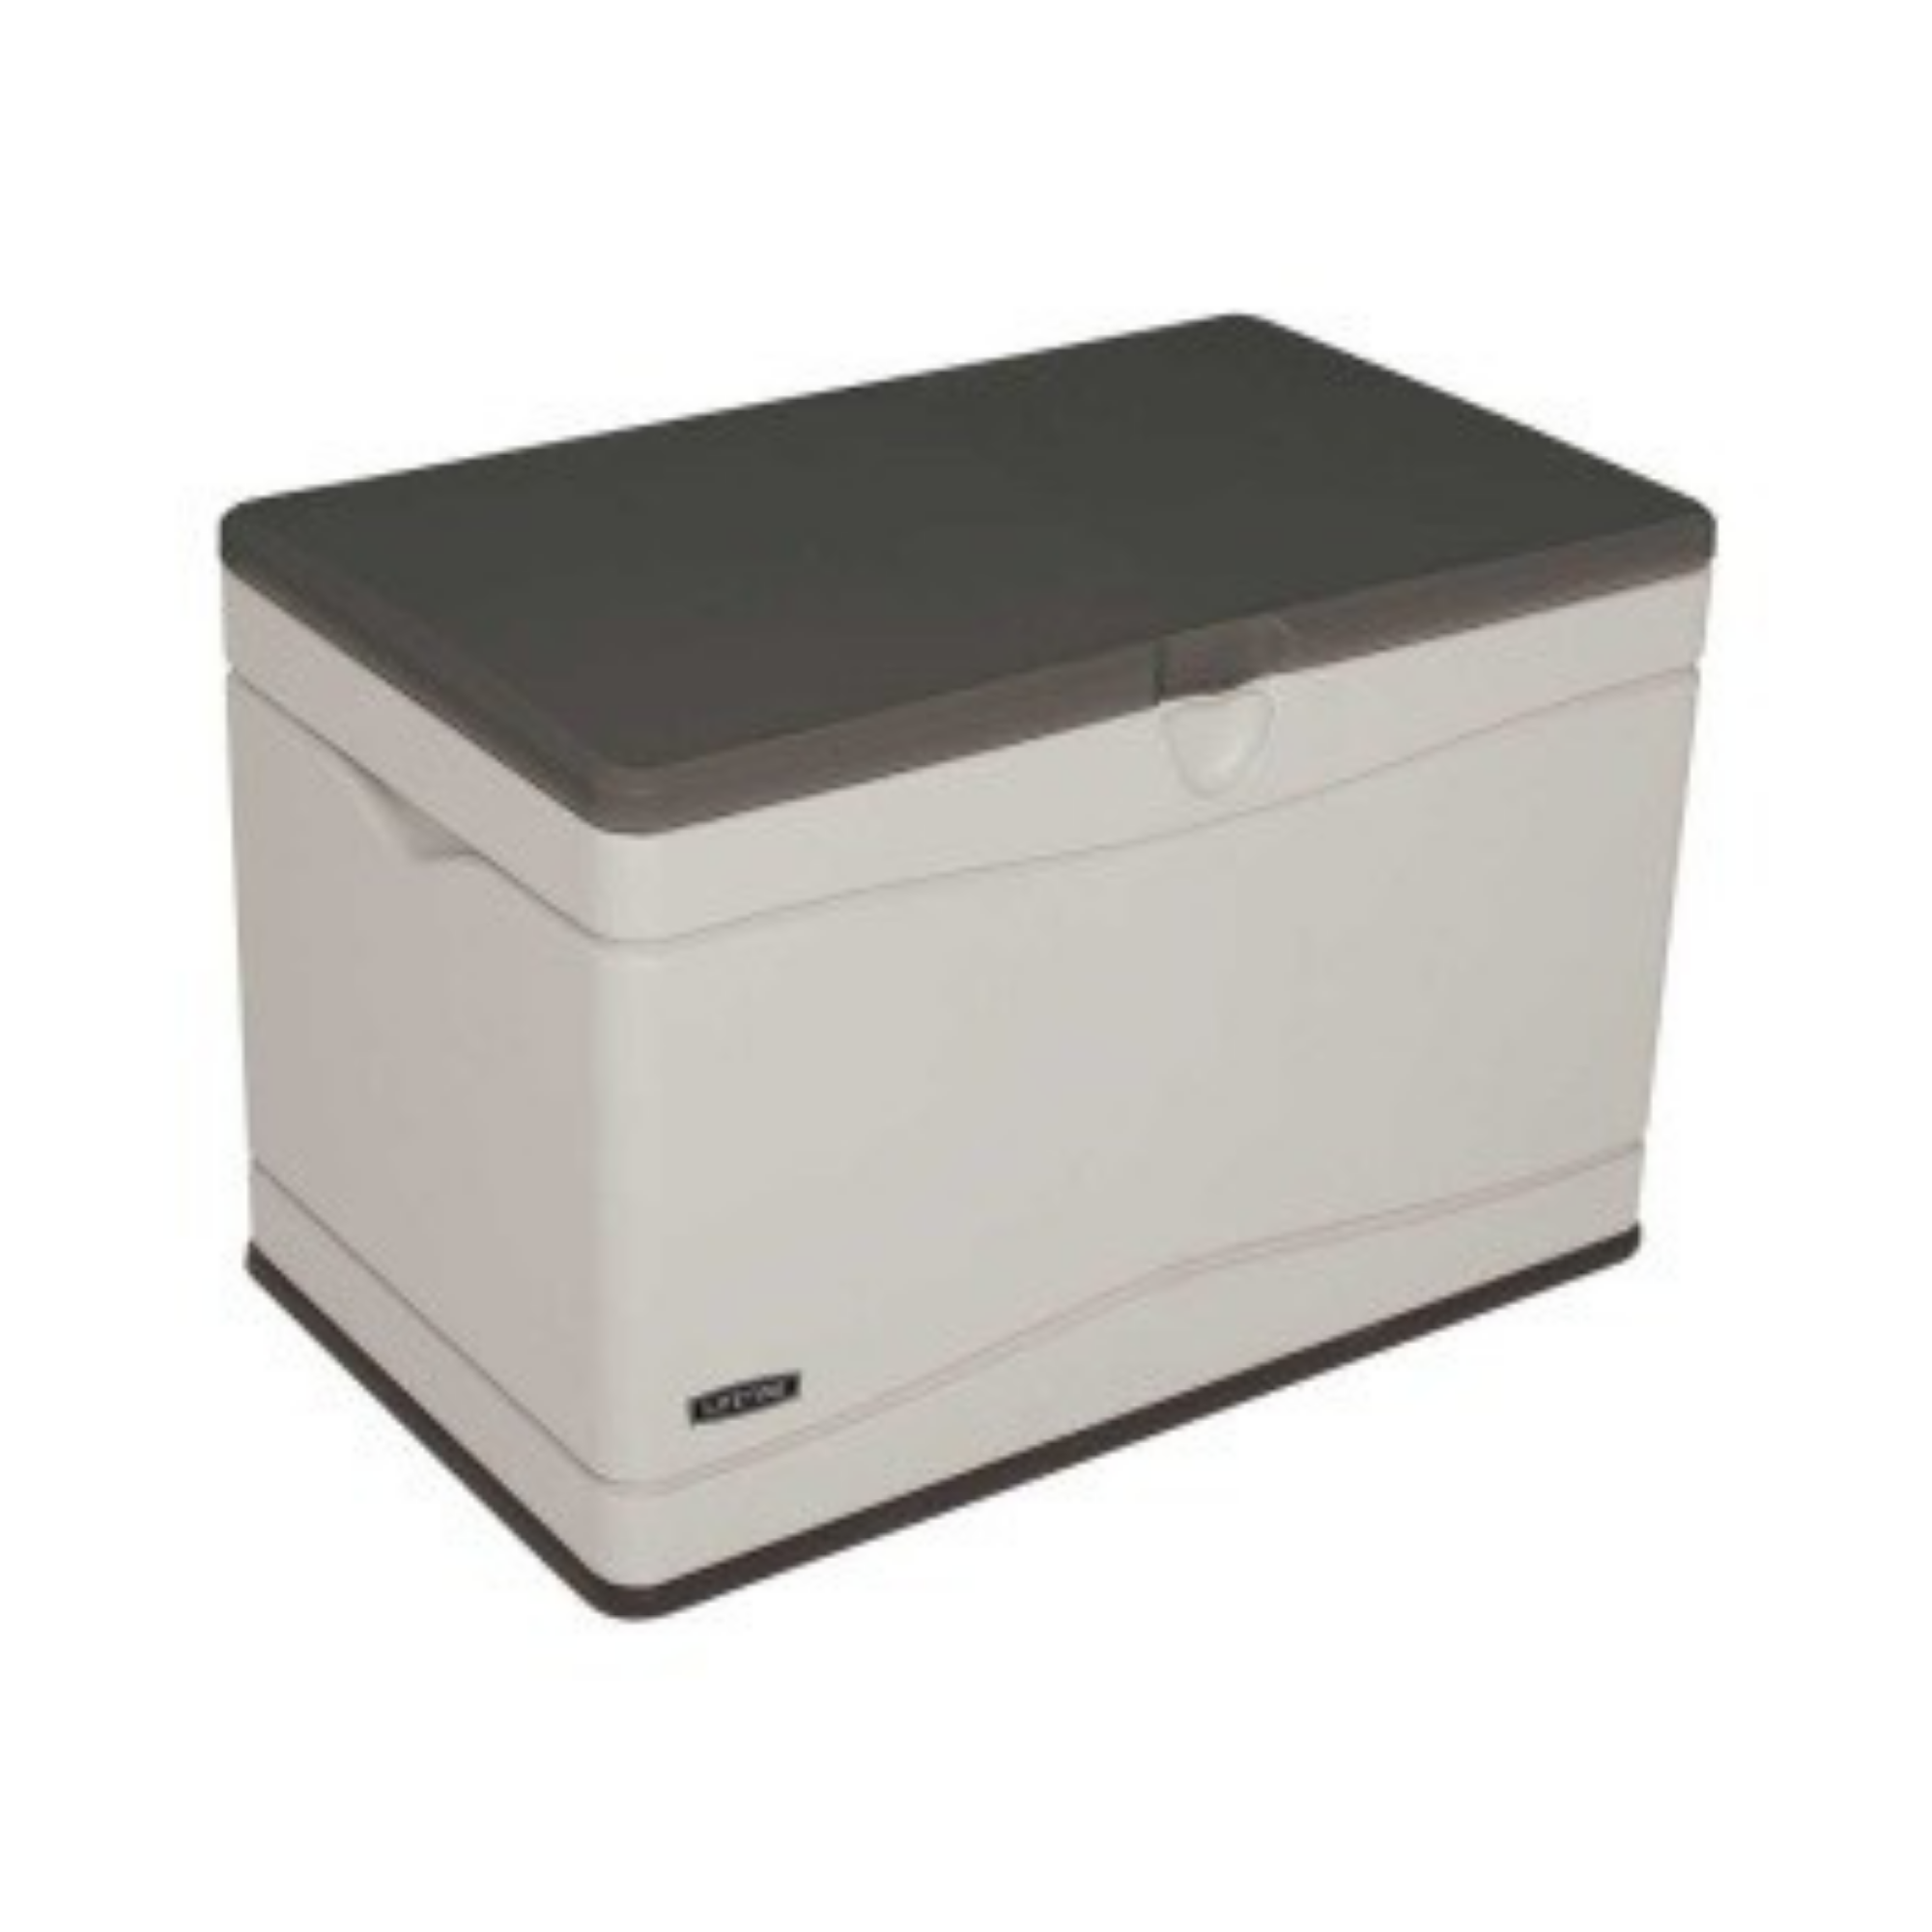 Lifetime 500L Plastic Outdoor Storage Box Brown/Desert Sand - 3x2